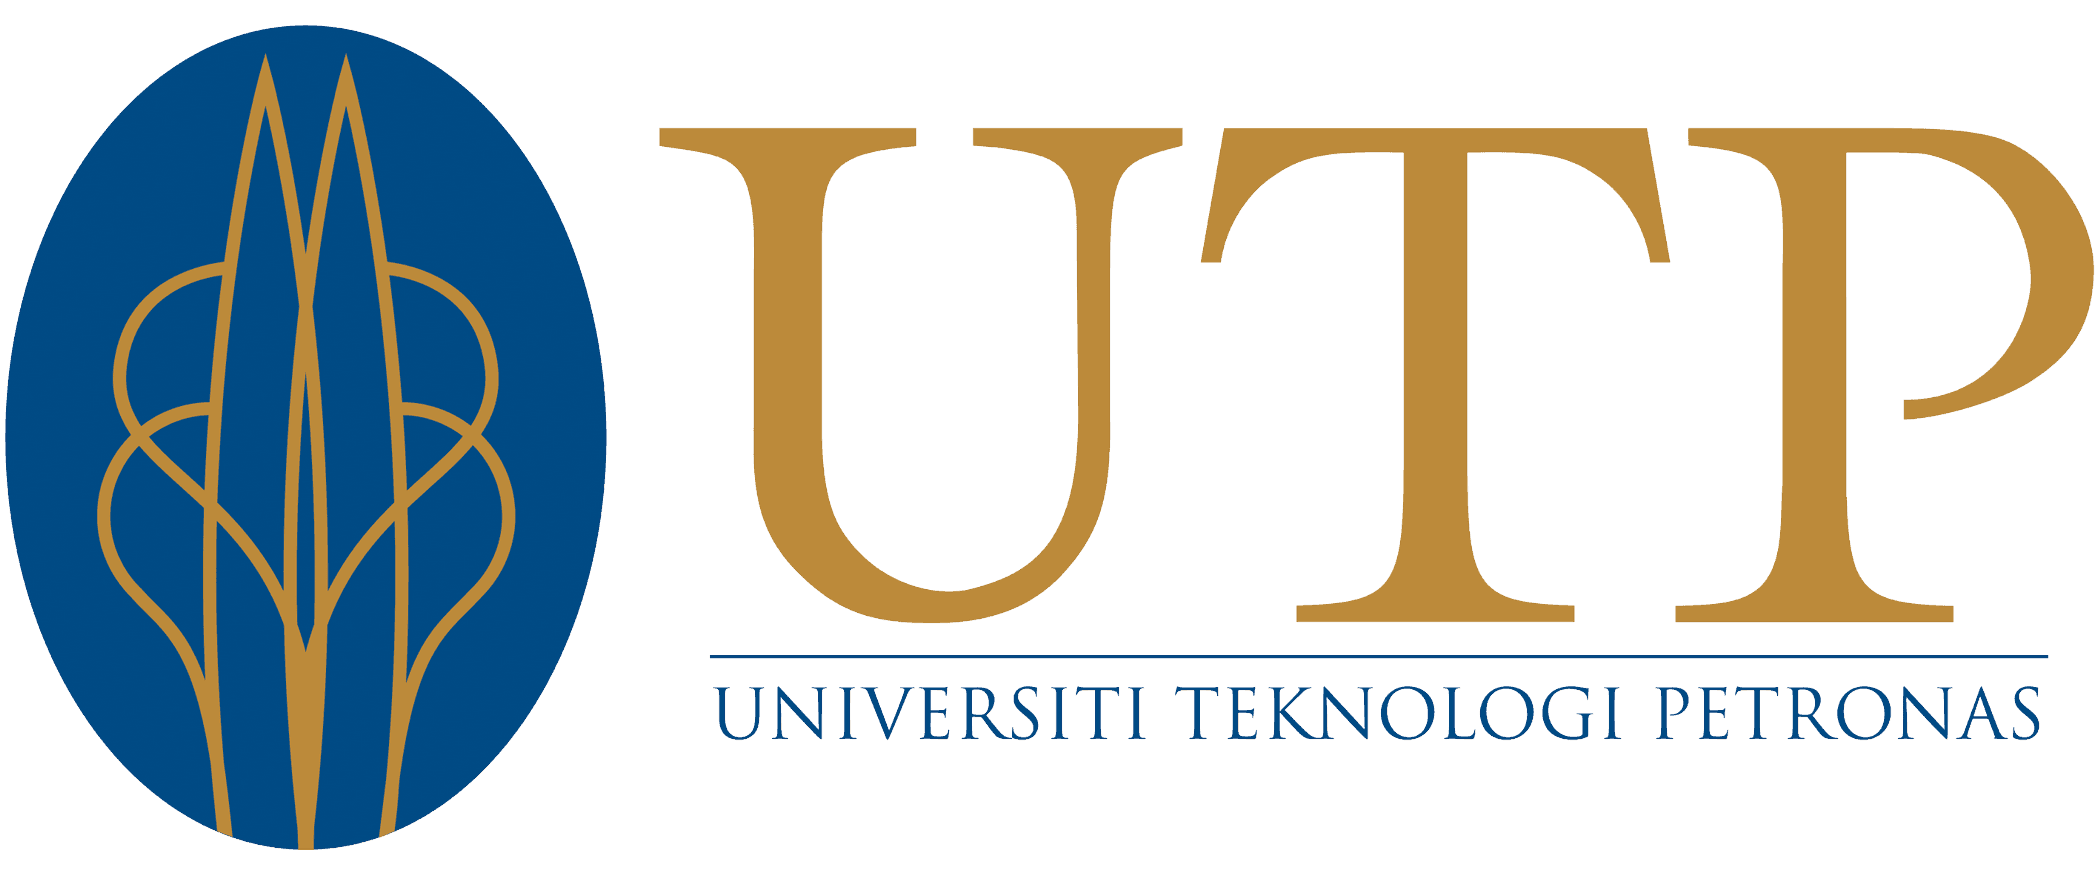 UTP Logo (Universiti Teknologi Petronas) png